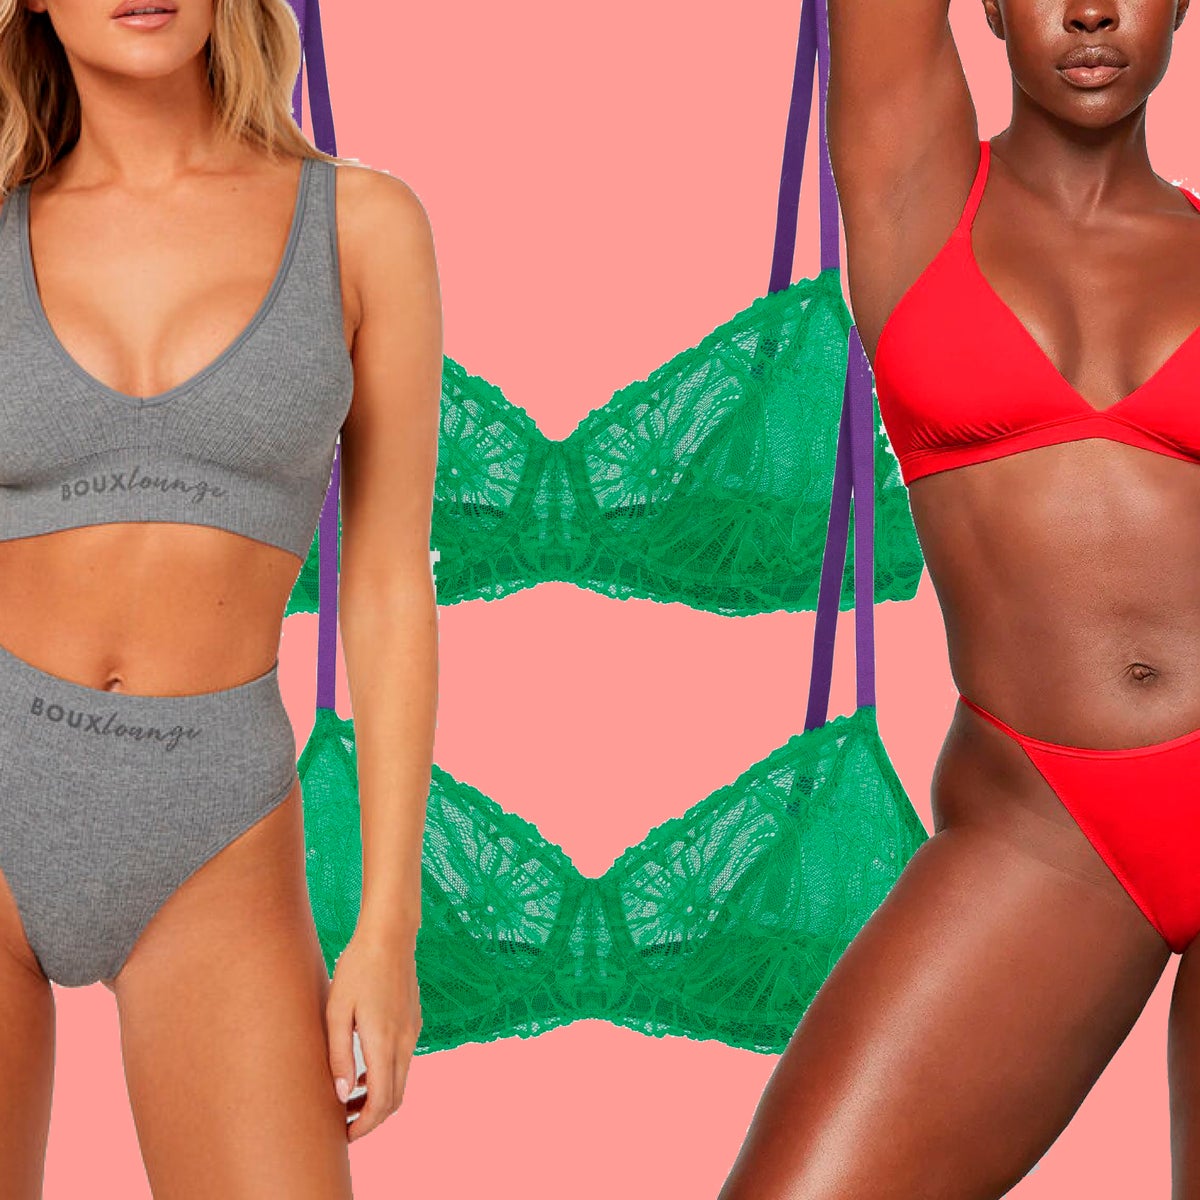 Women's Best Selling Intimates: Bras, Bodysuits, Undies, + More